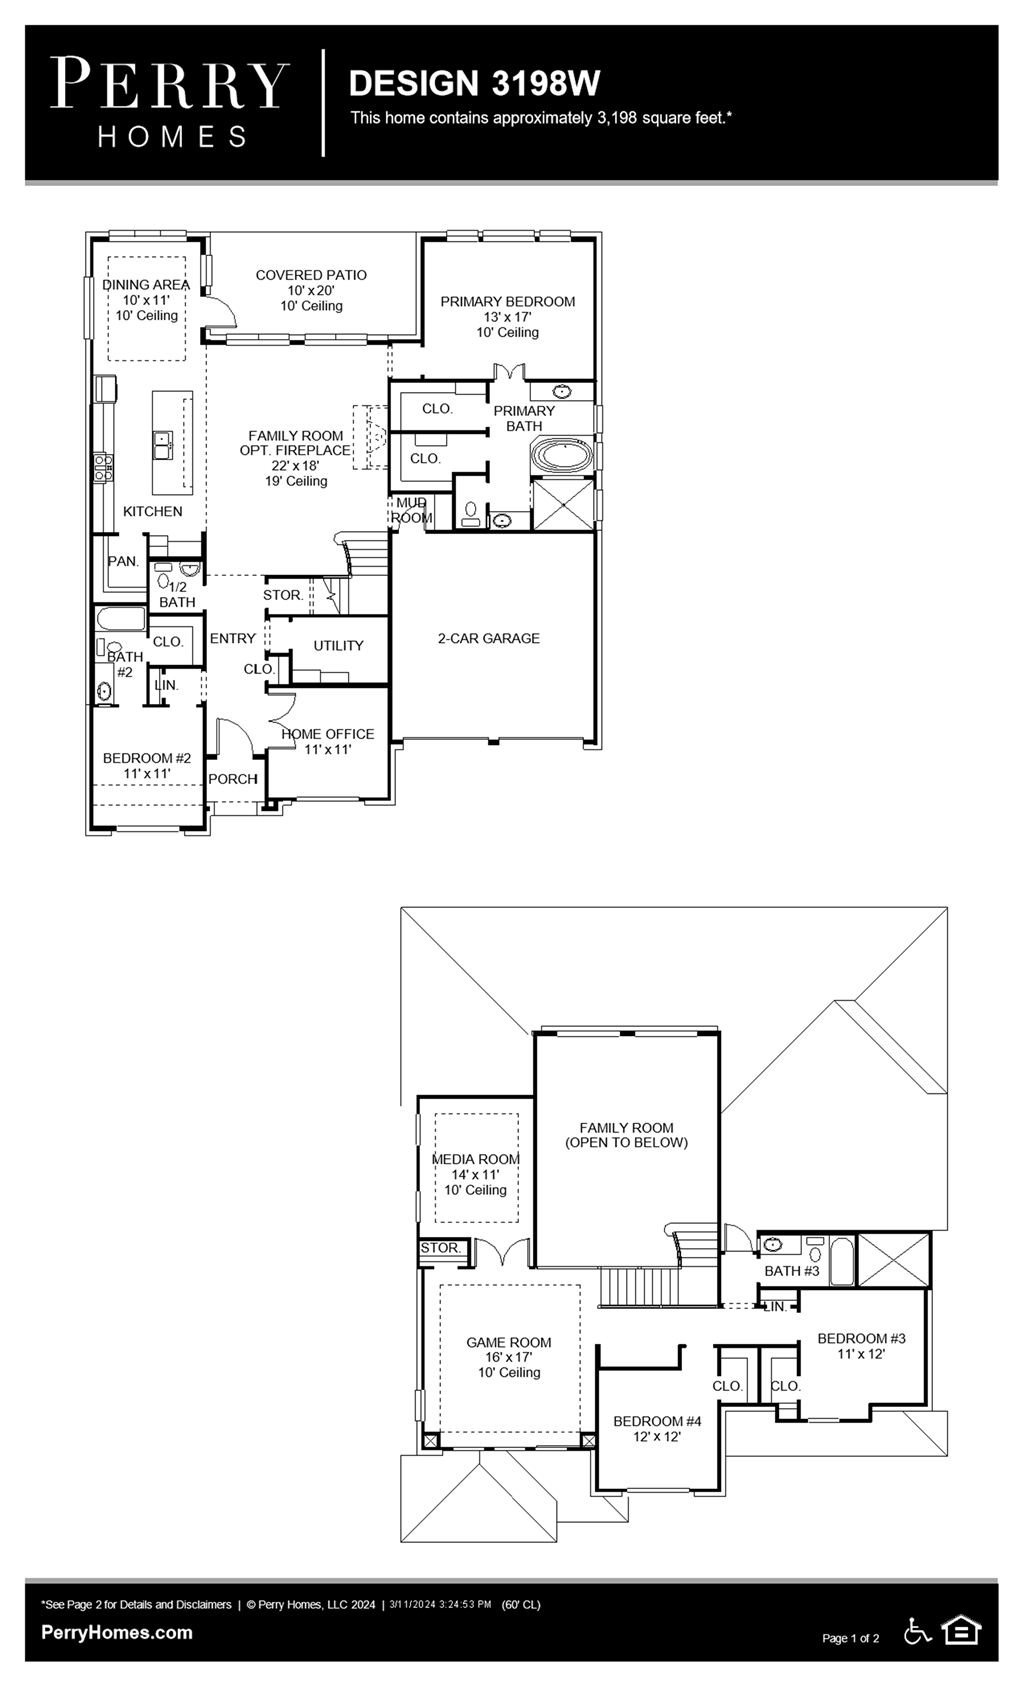 Floor Plan for 3198W